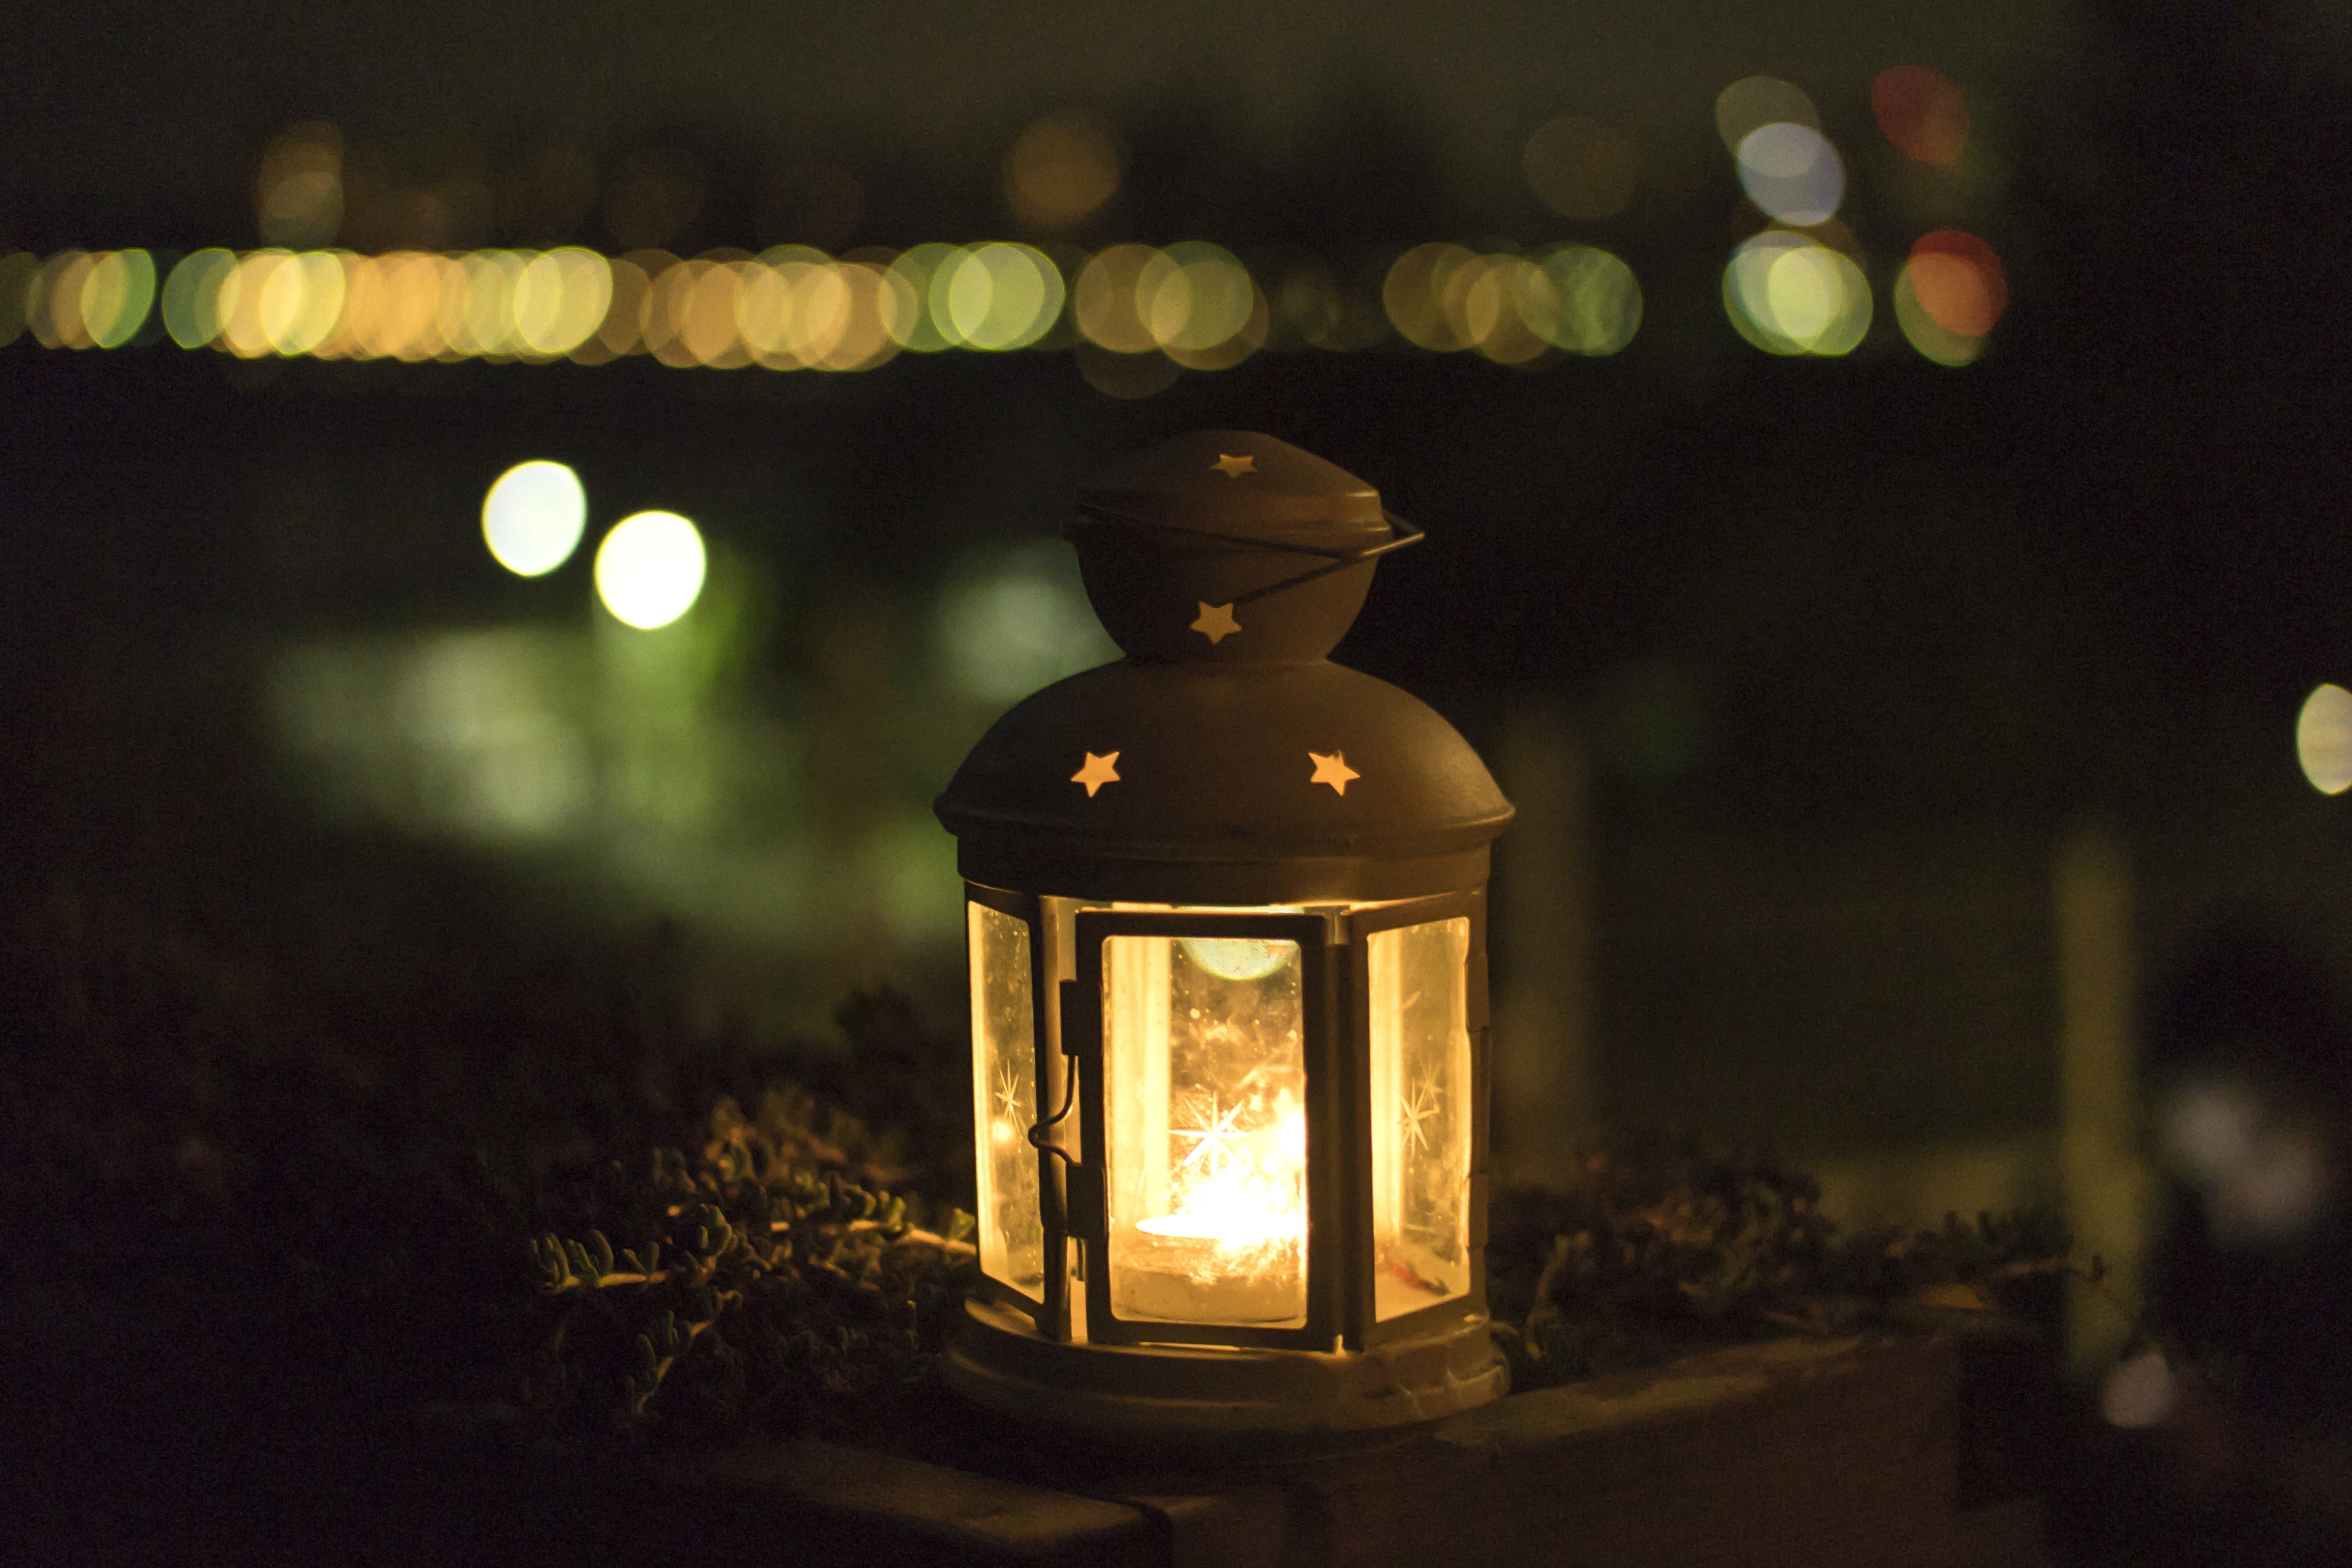 Free picture: lantern, light, night, dark, decoration, object, antique